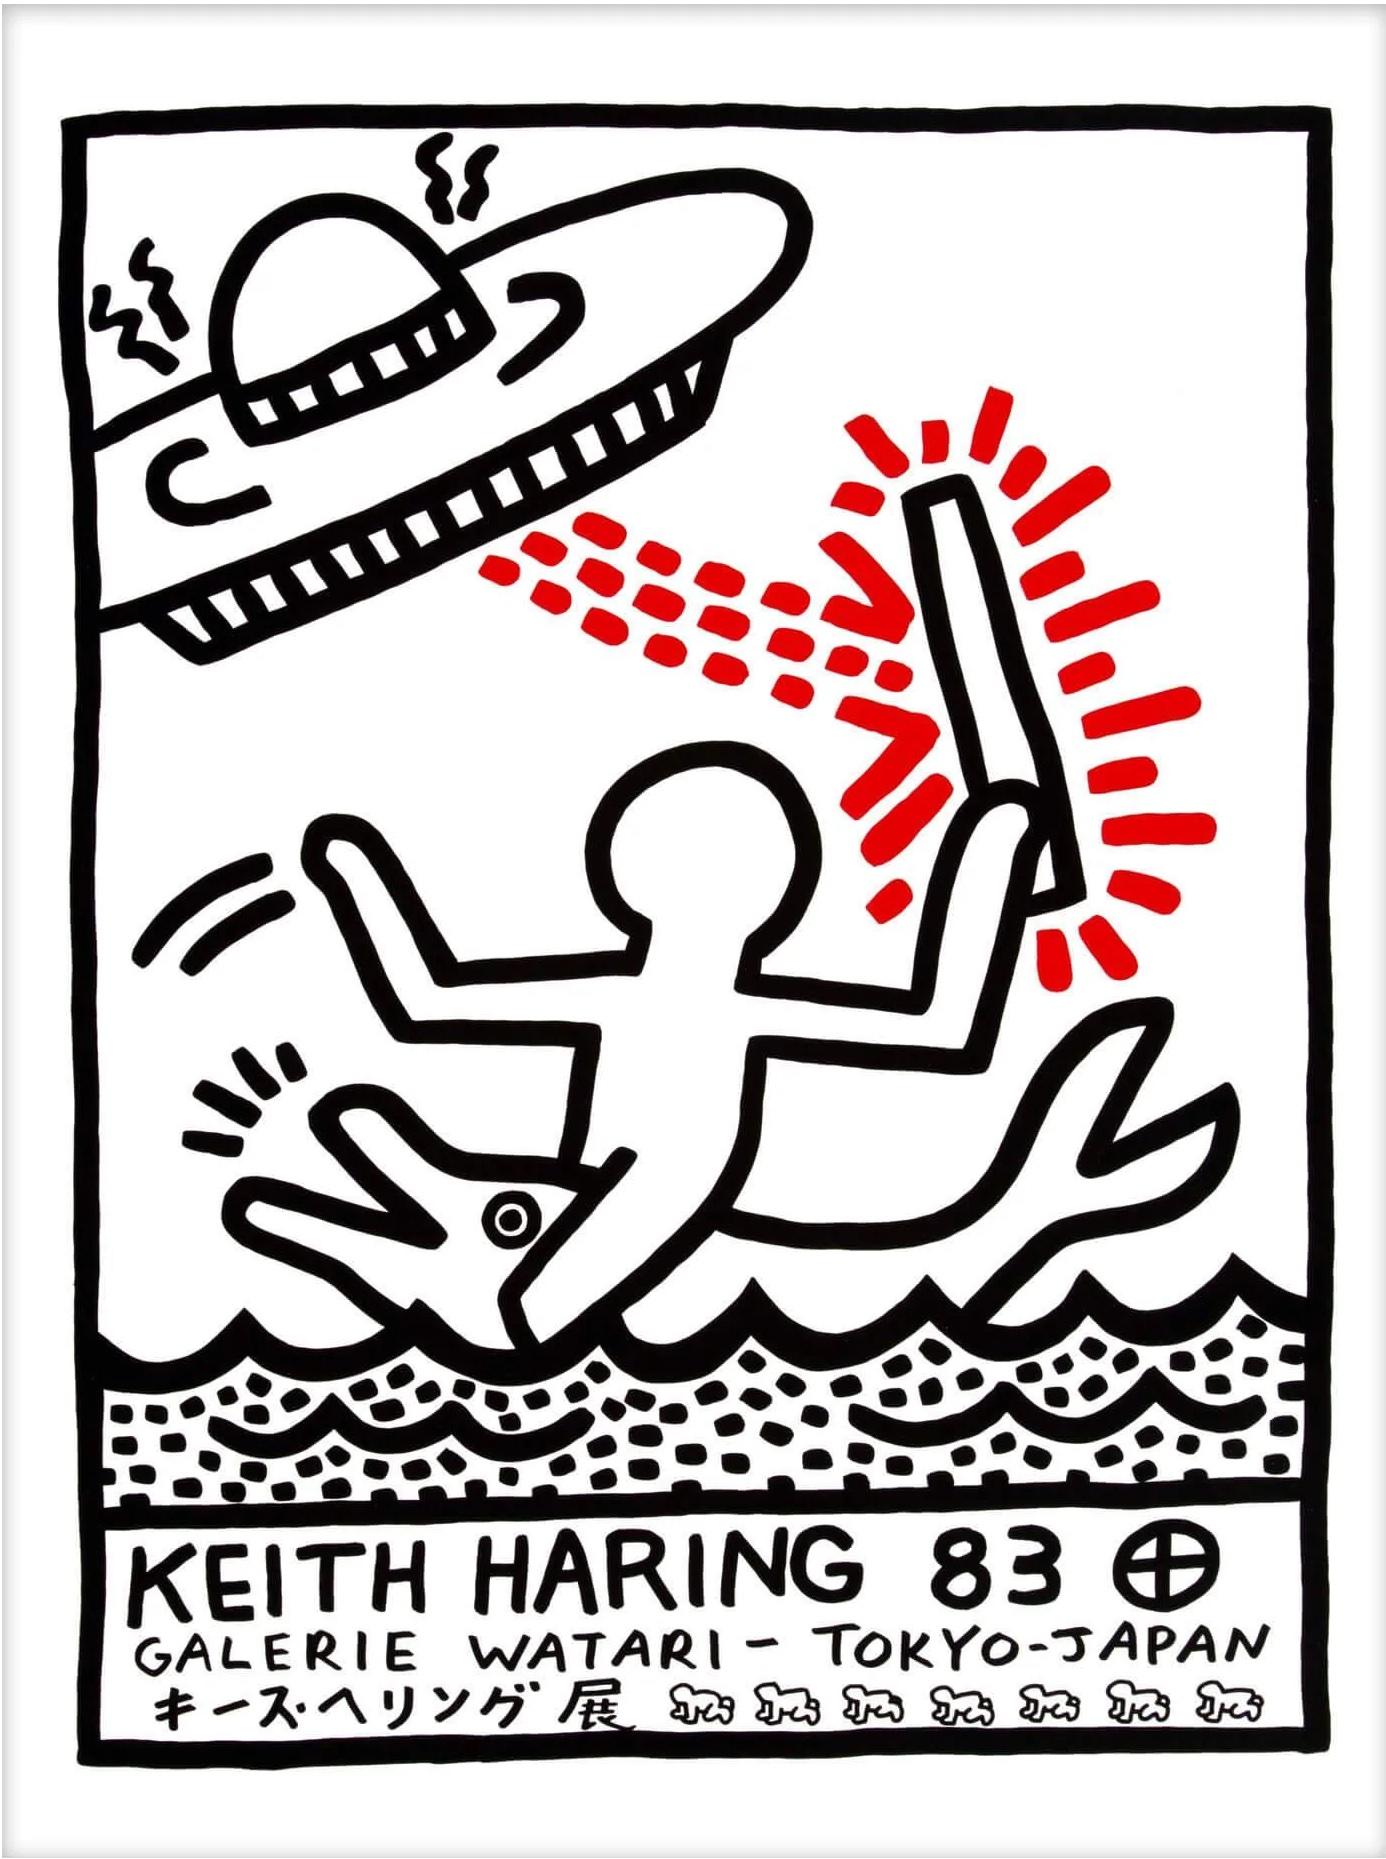 (after) Keith Haring Figurative Print - Galerie Watari Tokyo Poster